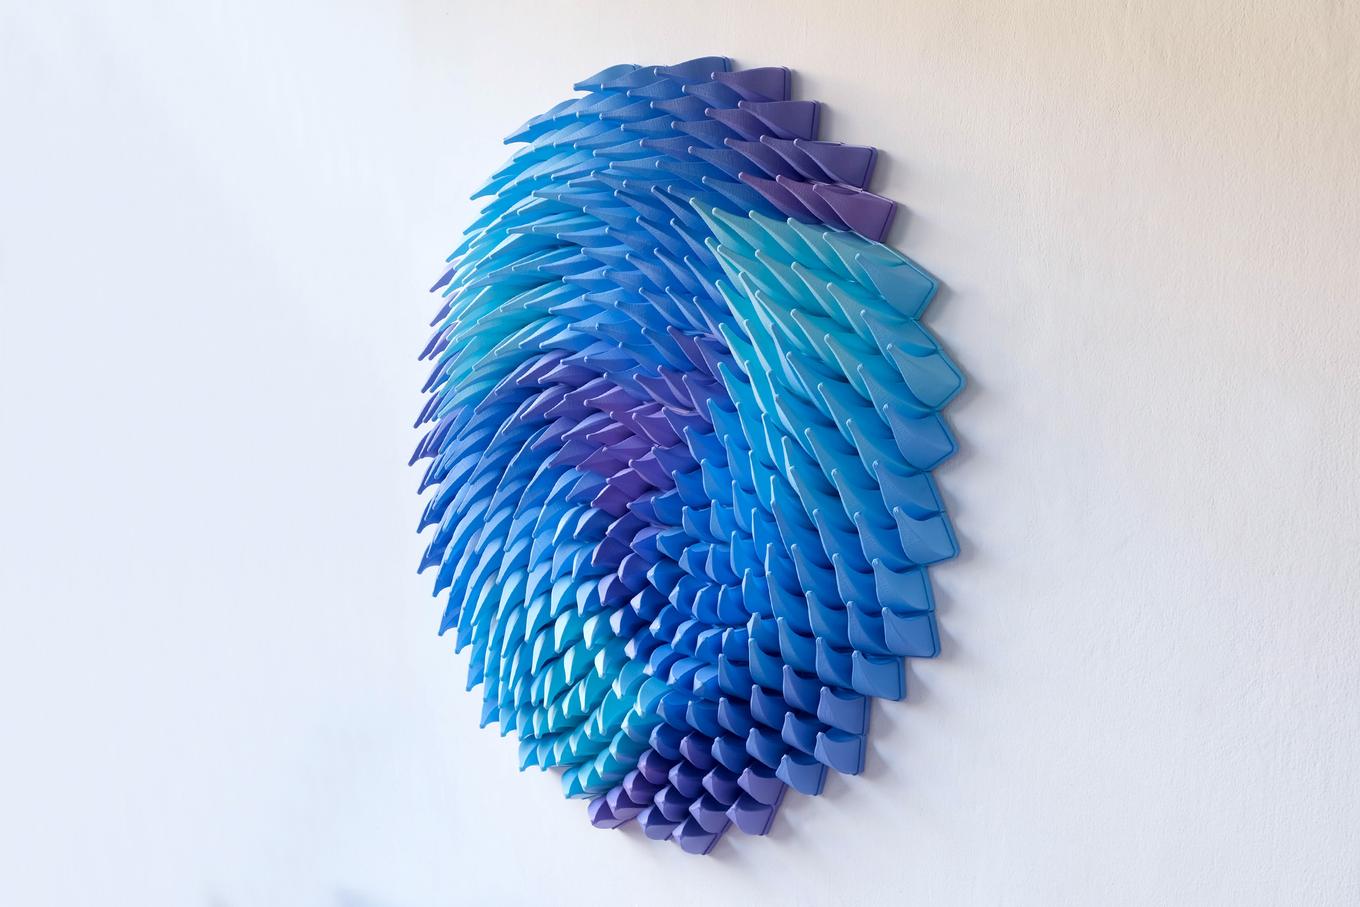 Whirlpool | Herschel Shapiro | Organic Geometric Sculptures